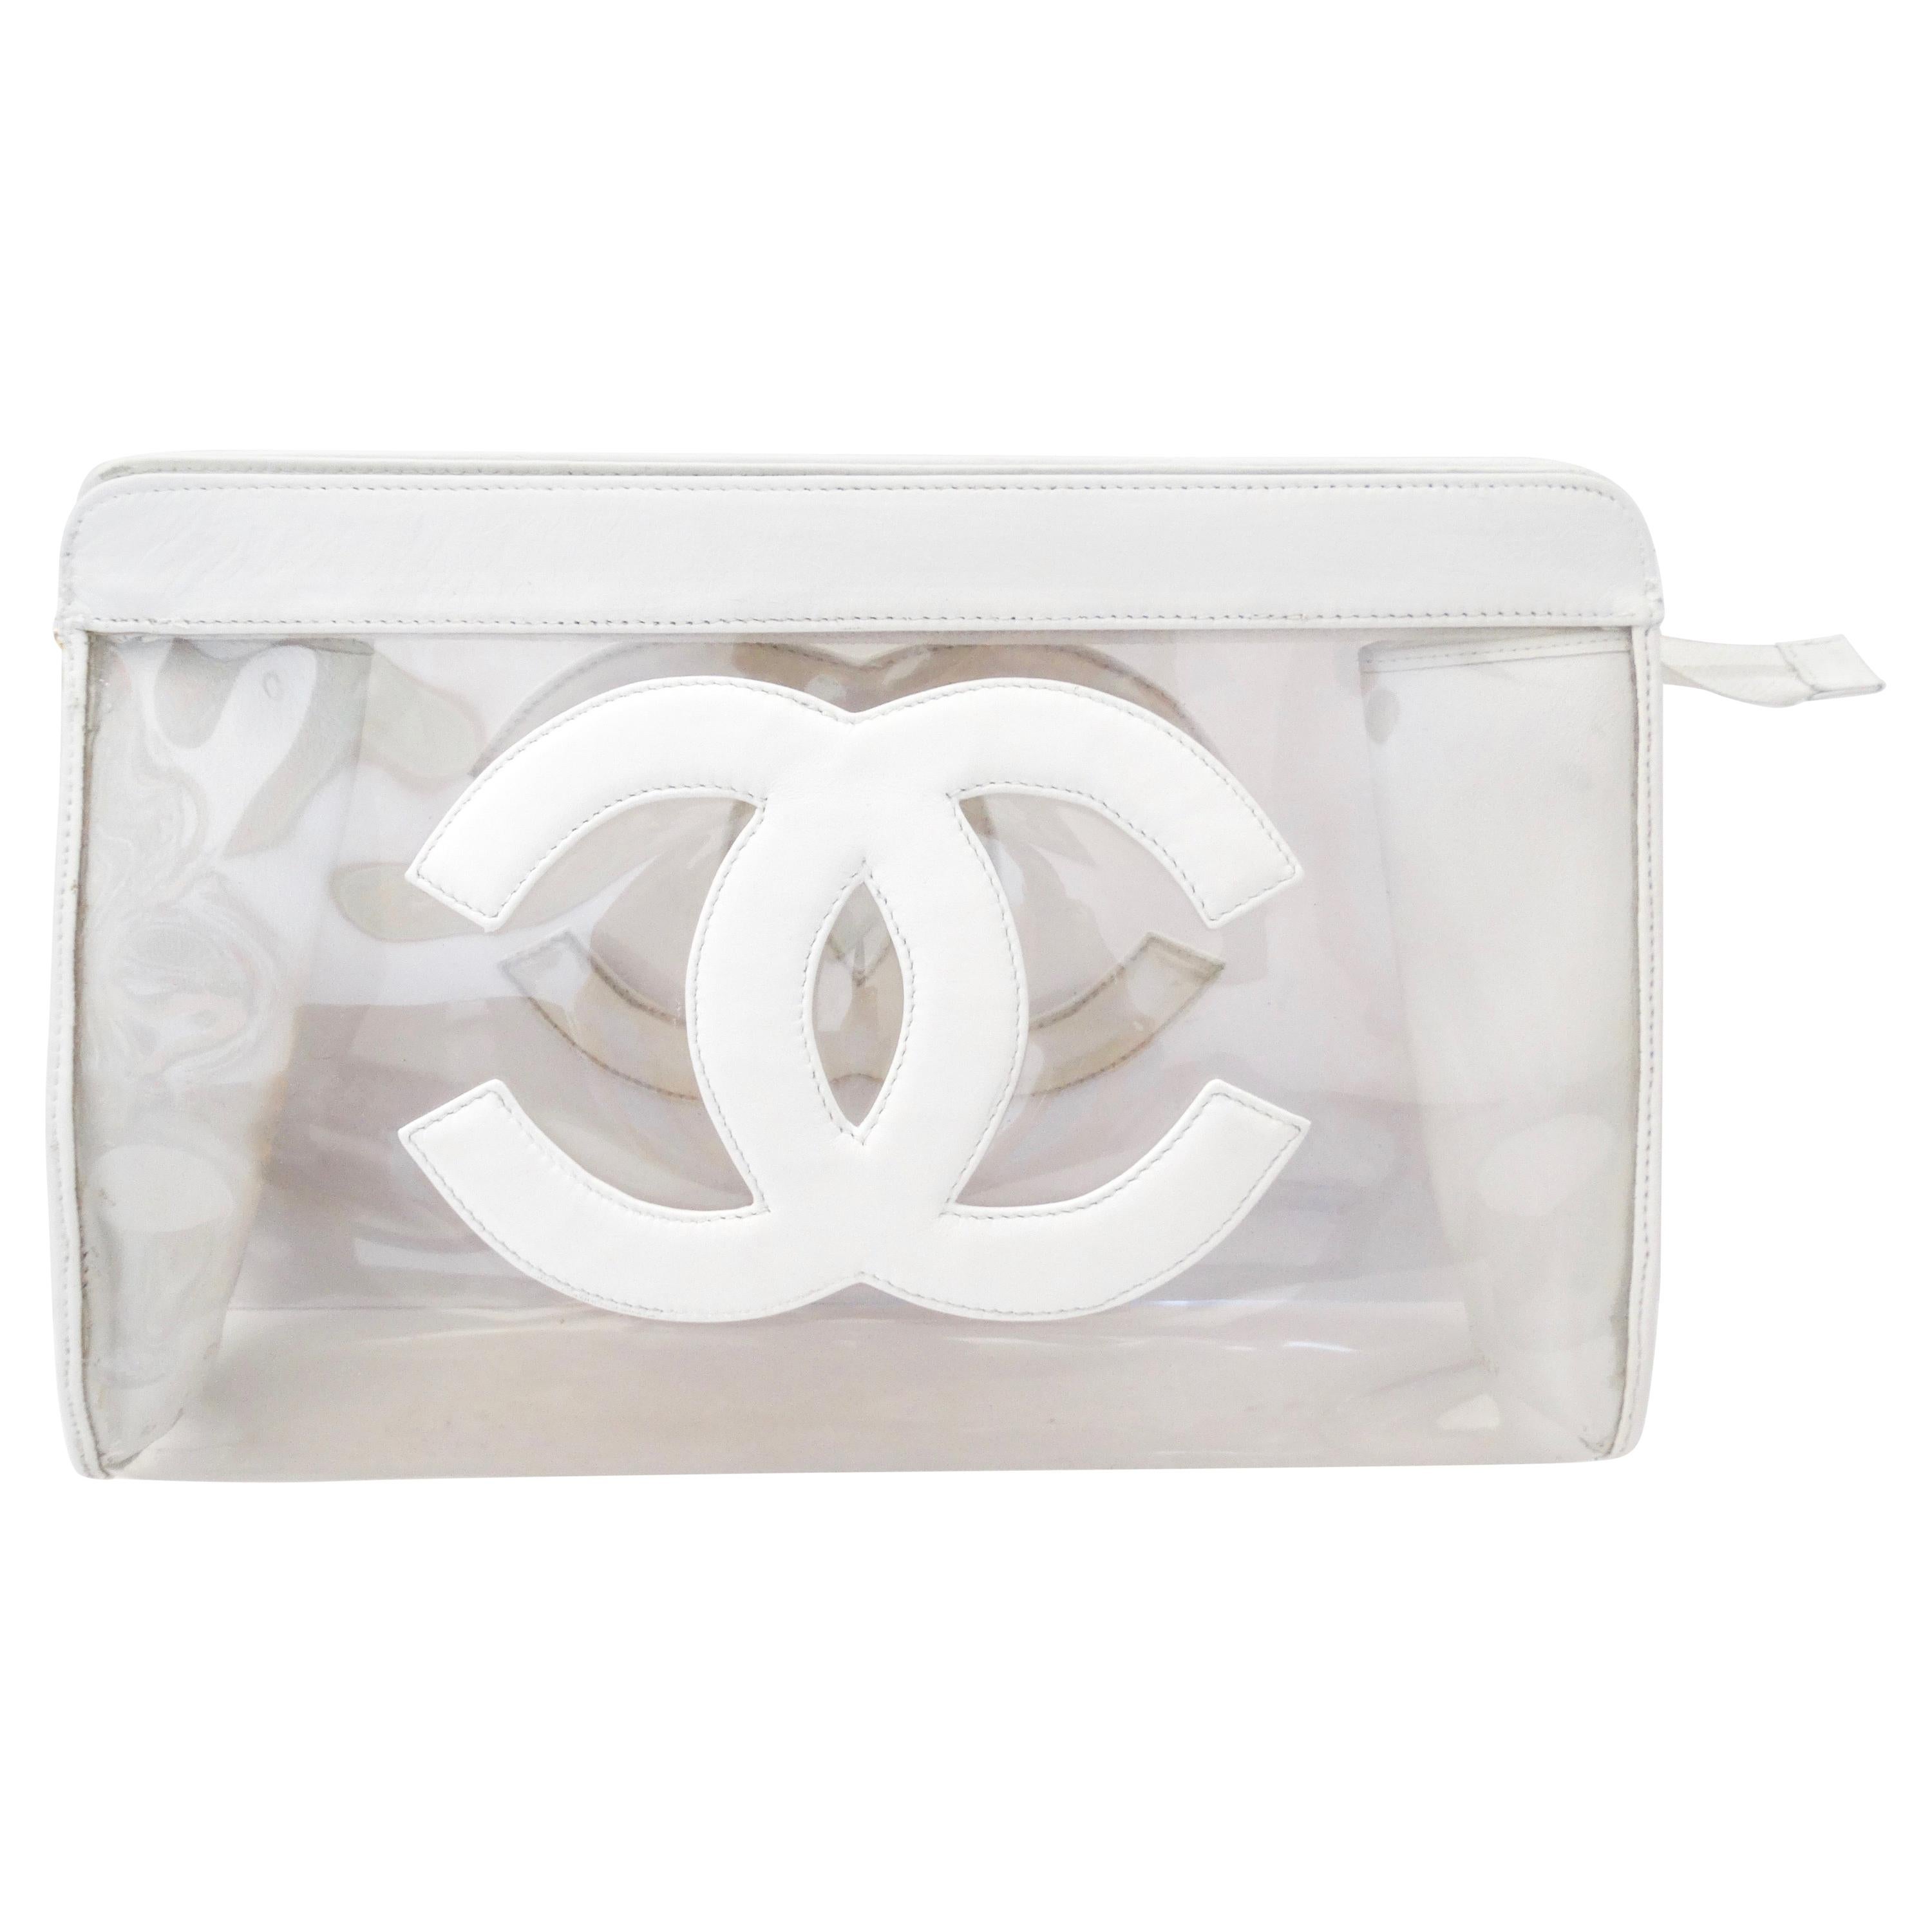 1990s Chanel 'CC' Clear PVC Clutch